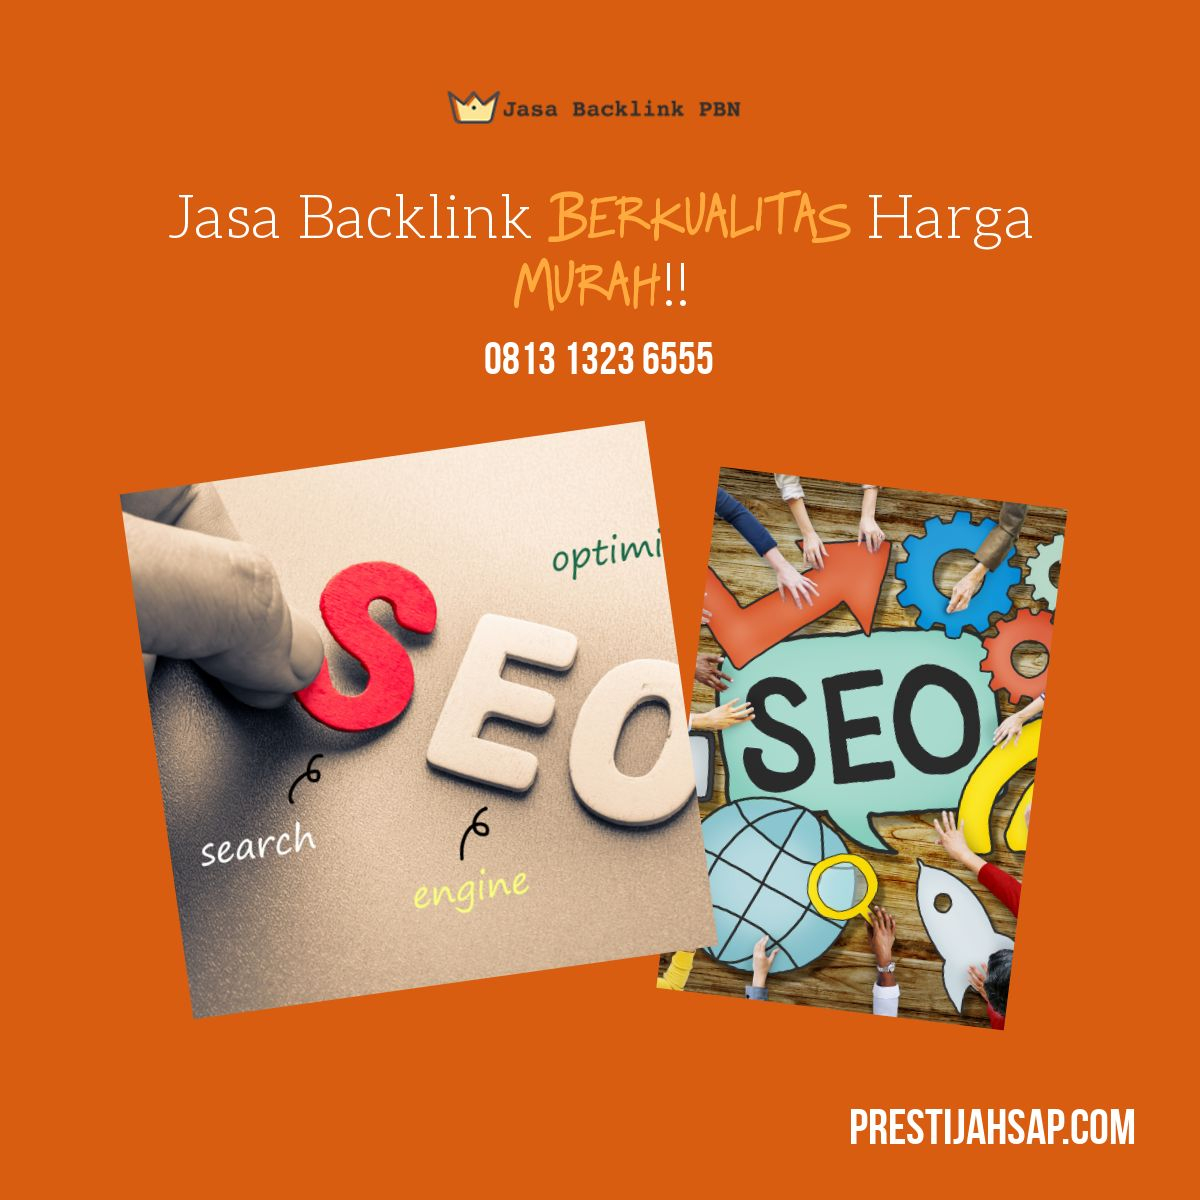 Jasa Backlink Ads.Id